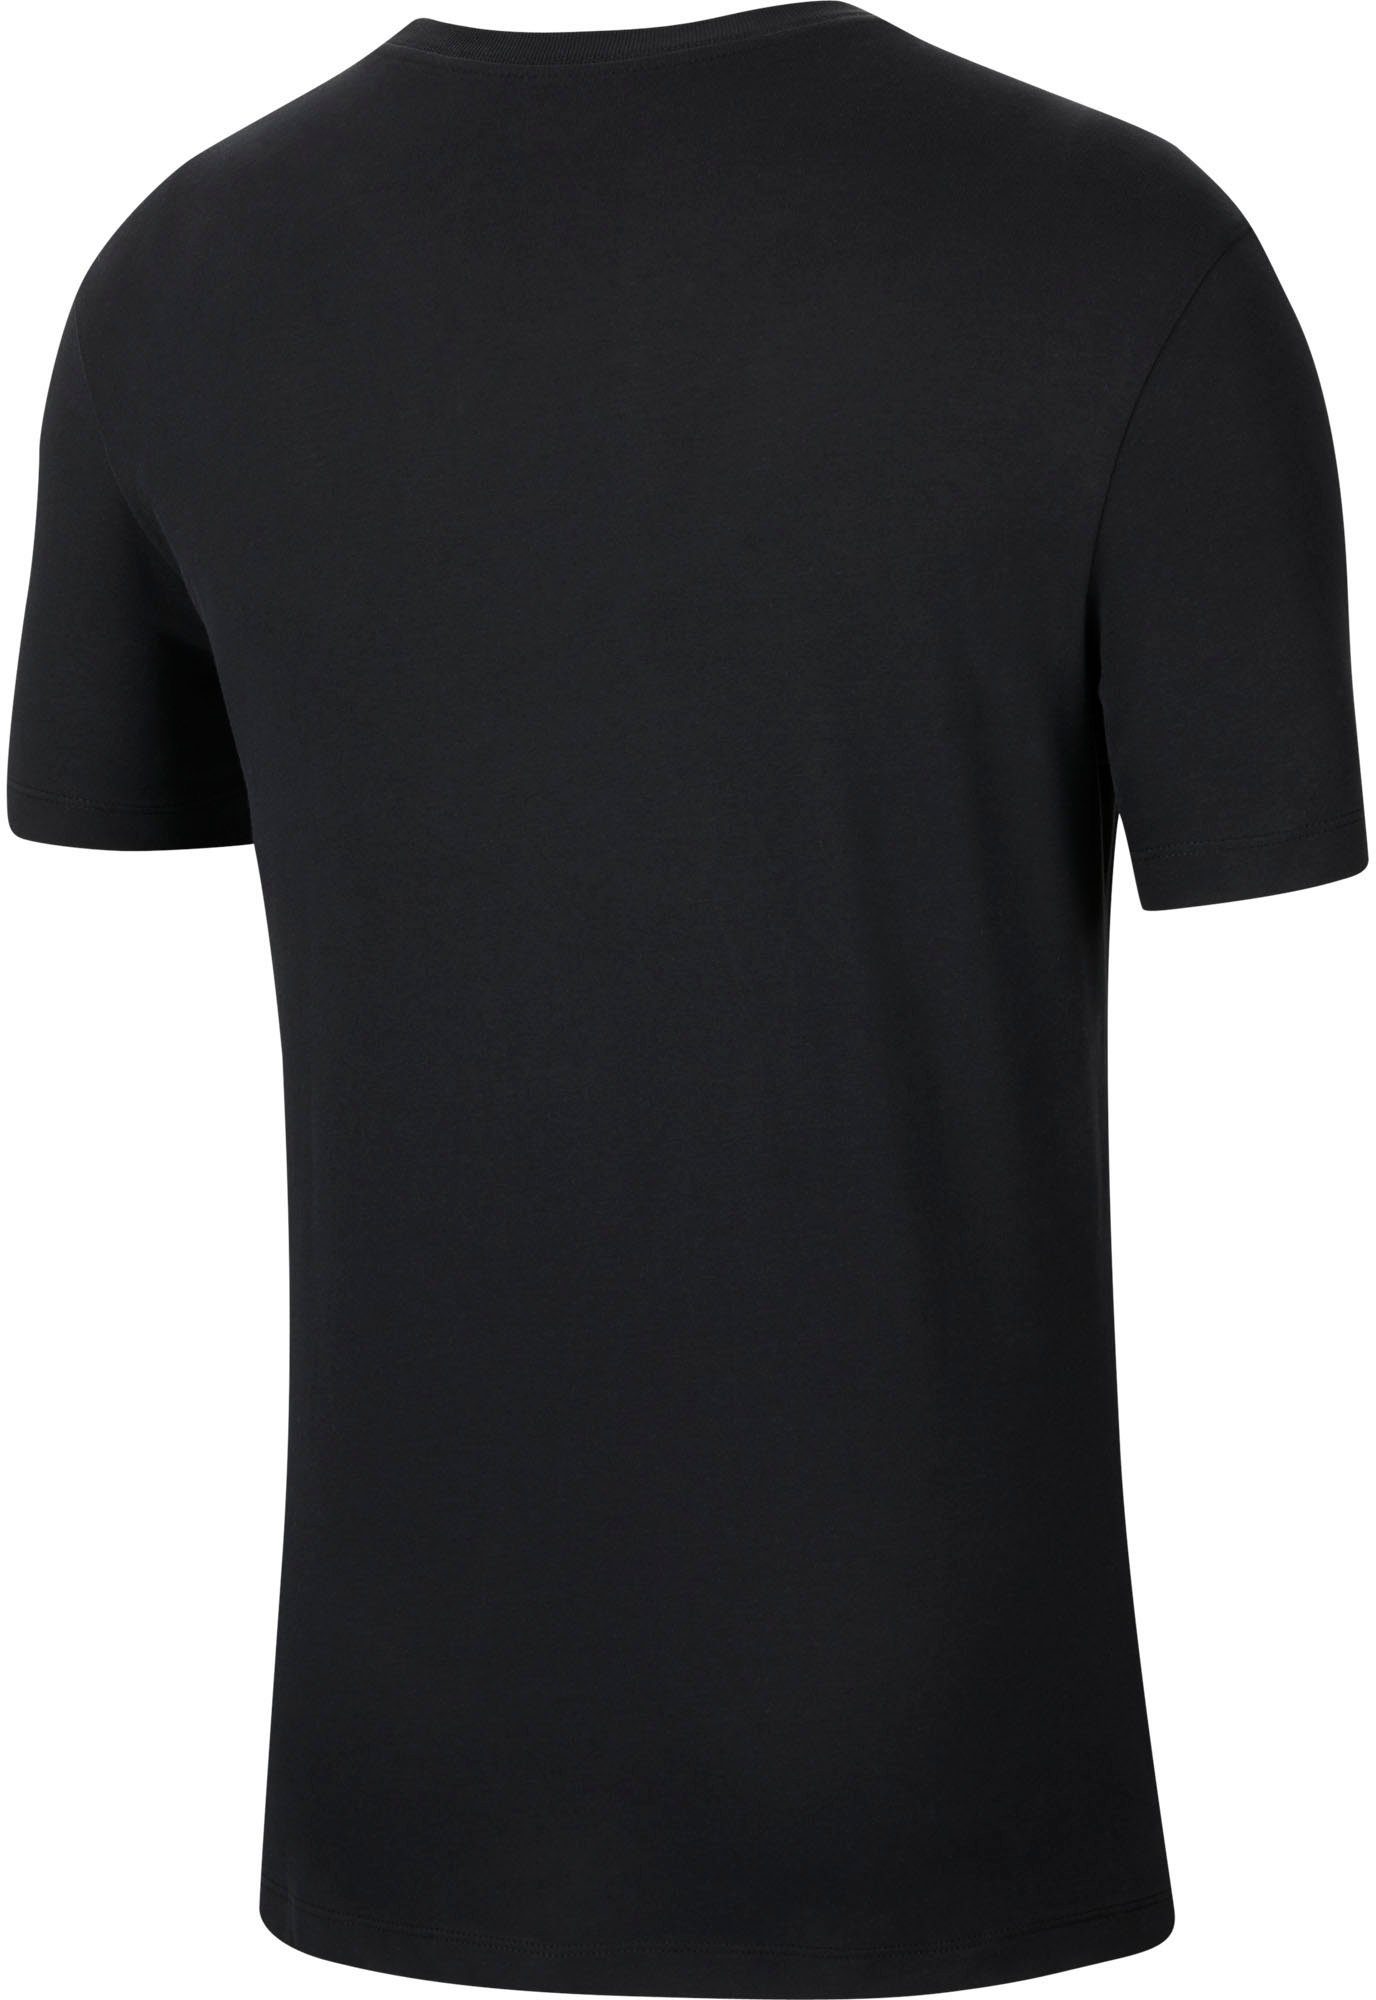 Swoosh T-Shirt Nike Men's Trainingsshirt Training Dri-FIT schwarz